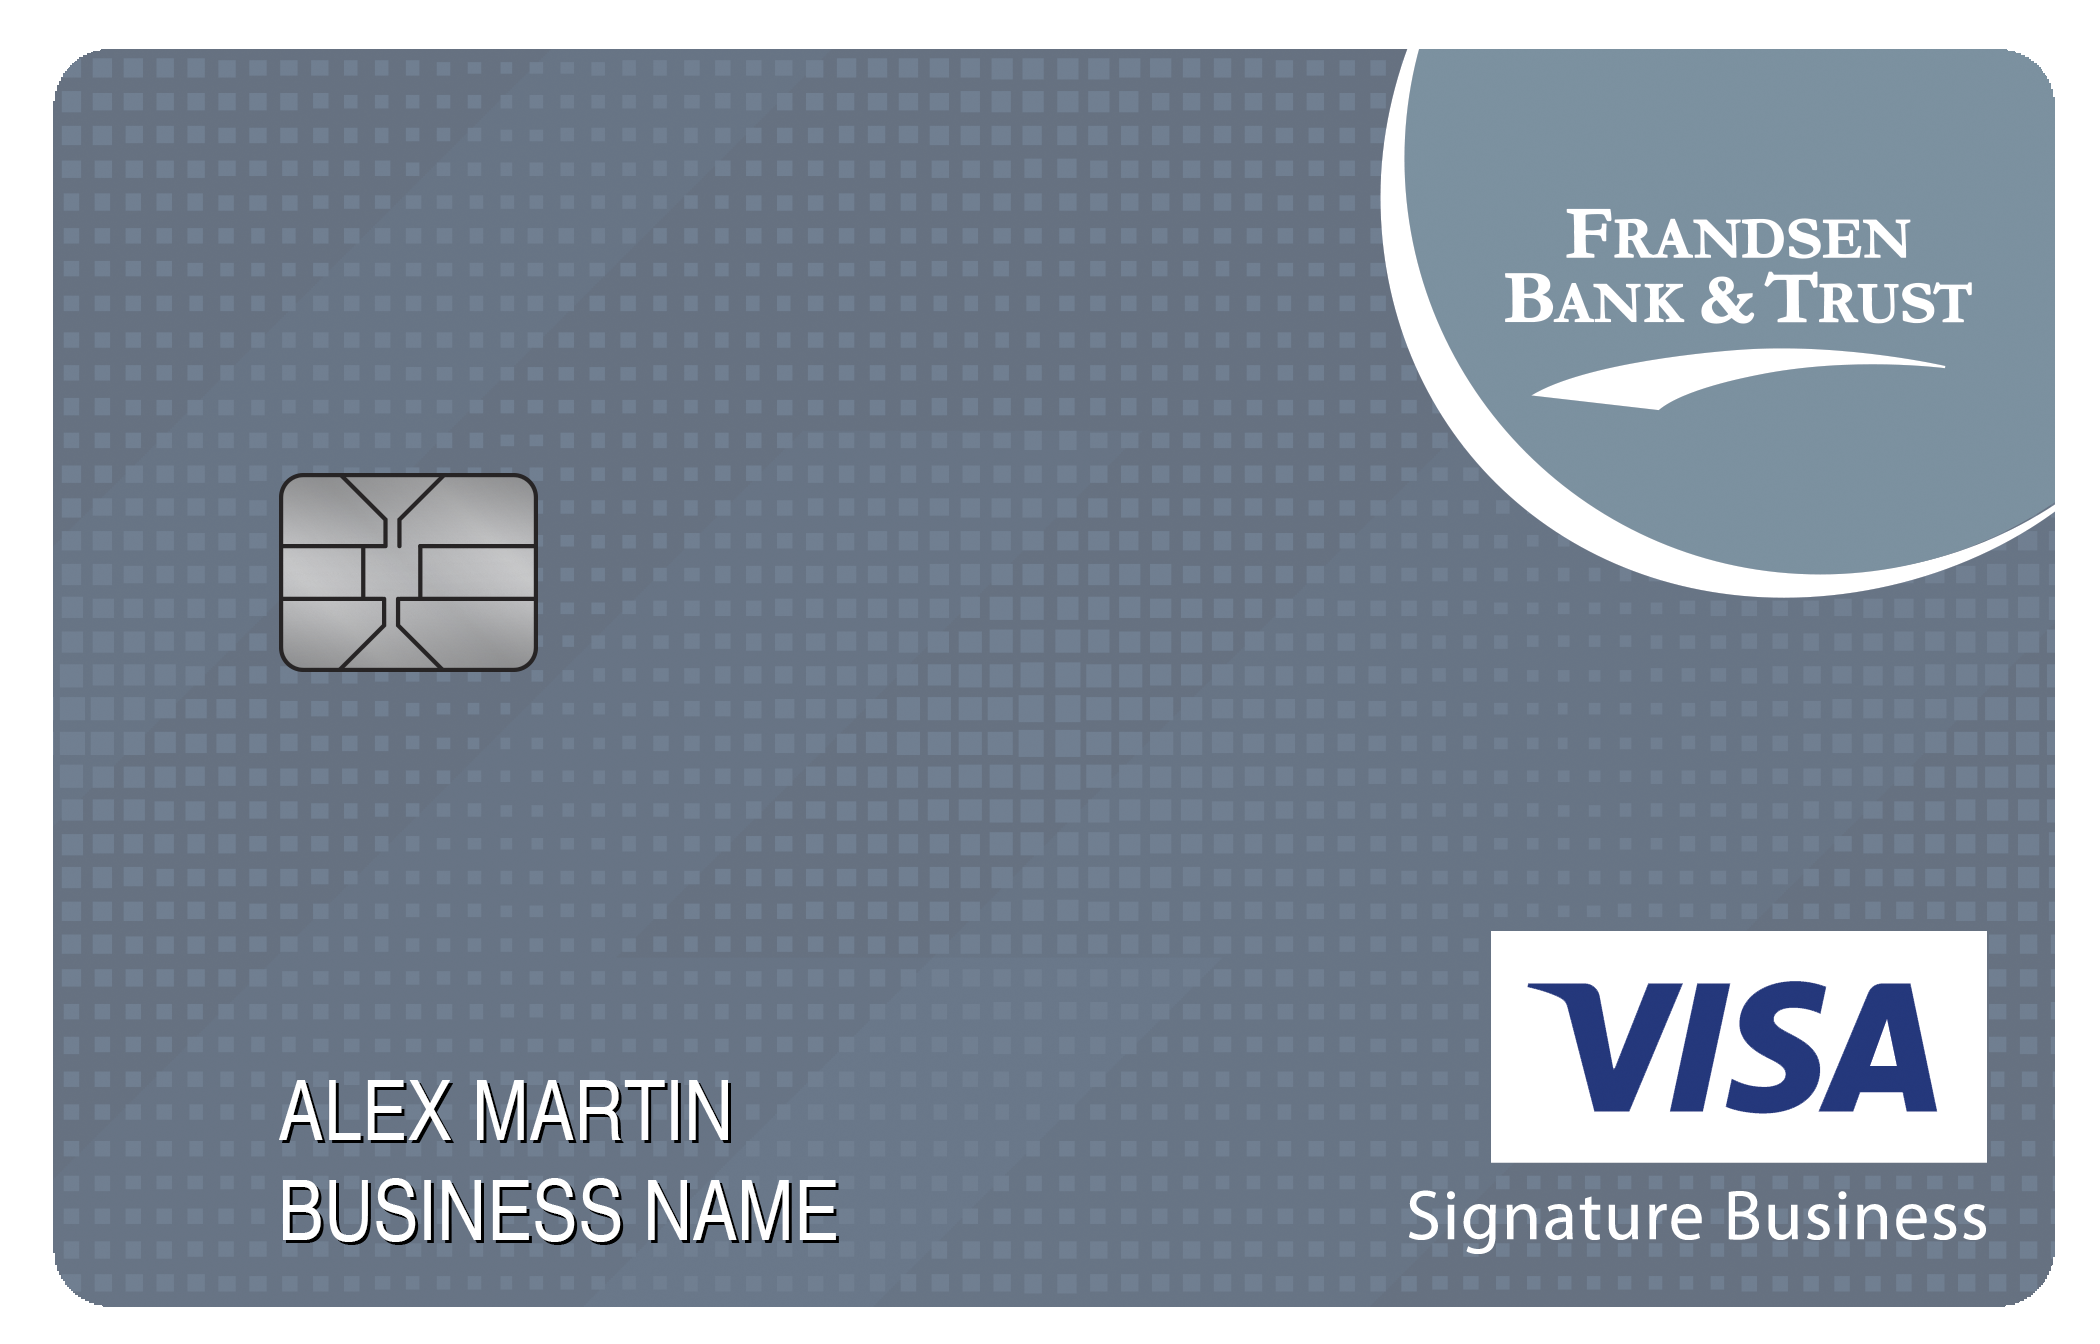 Frandsen Bank & Trust Smart Business Rewards Card